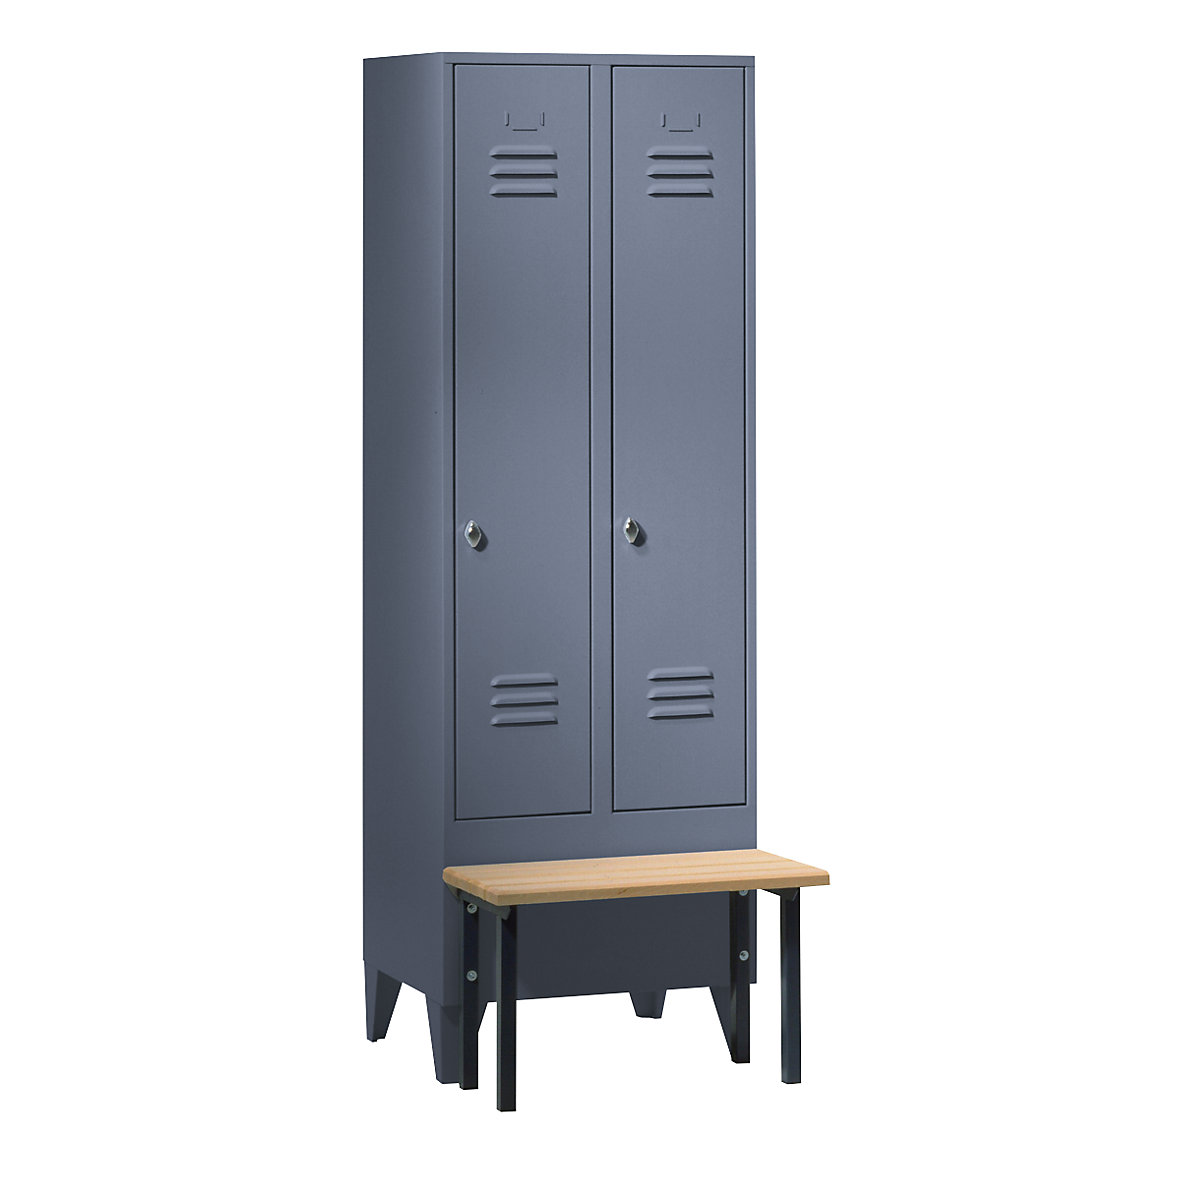 Garderobna omara s klopjo spredaj – Wolf, vrata s polno steno, širina razdelka 300 mm, 2 razdelka, modro siva-4